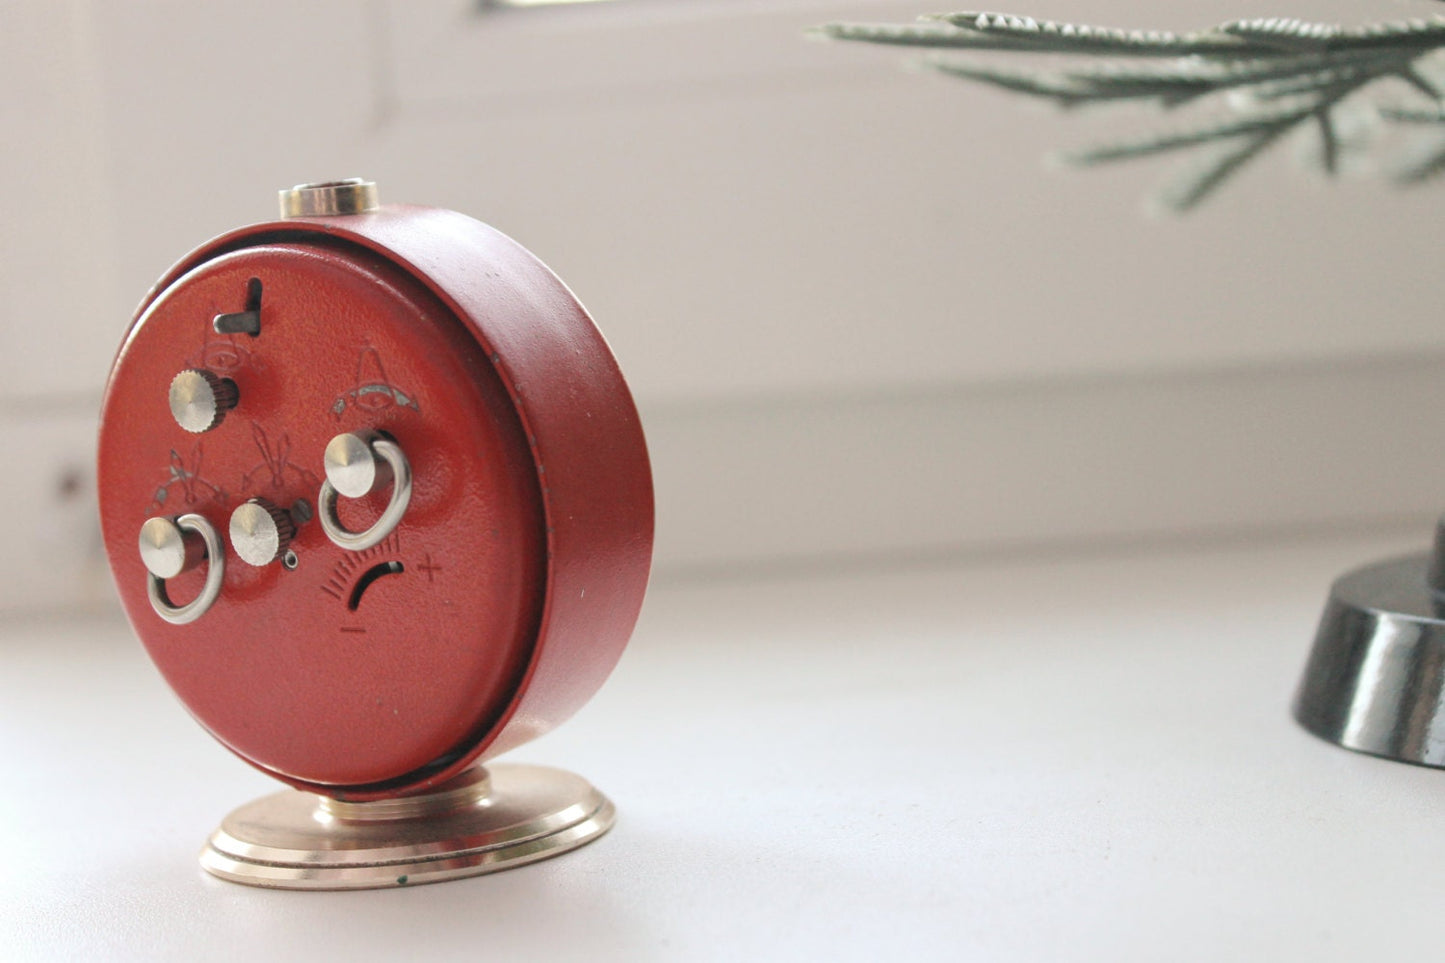 SLAVA - Shabby chick vintage Mechanical alarm clock from USSR era - 1960s-1970s - Soviet alarm clock